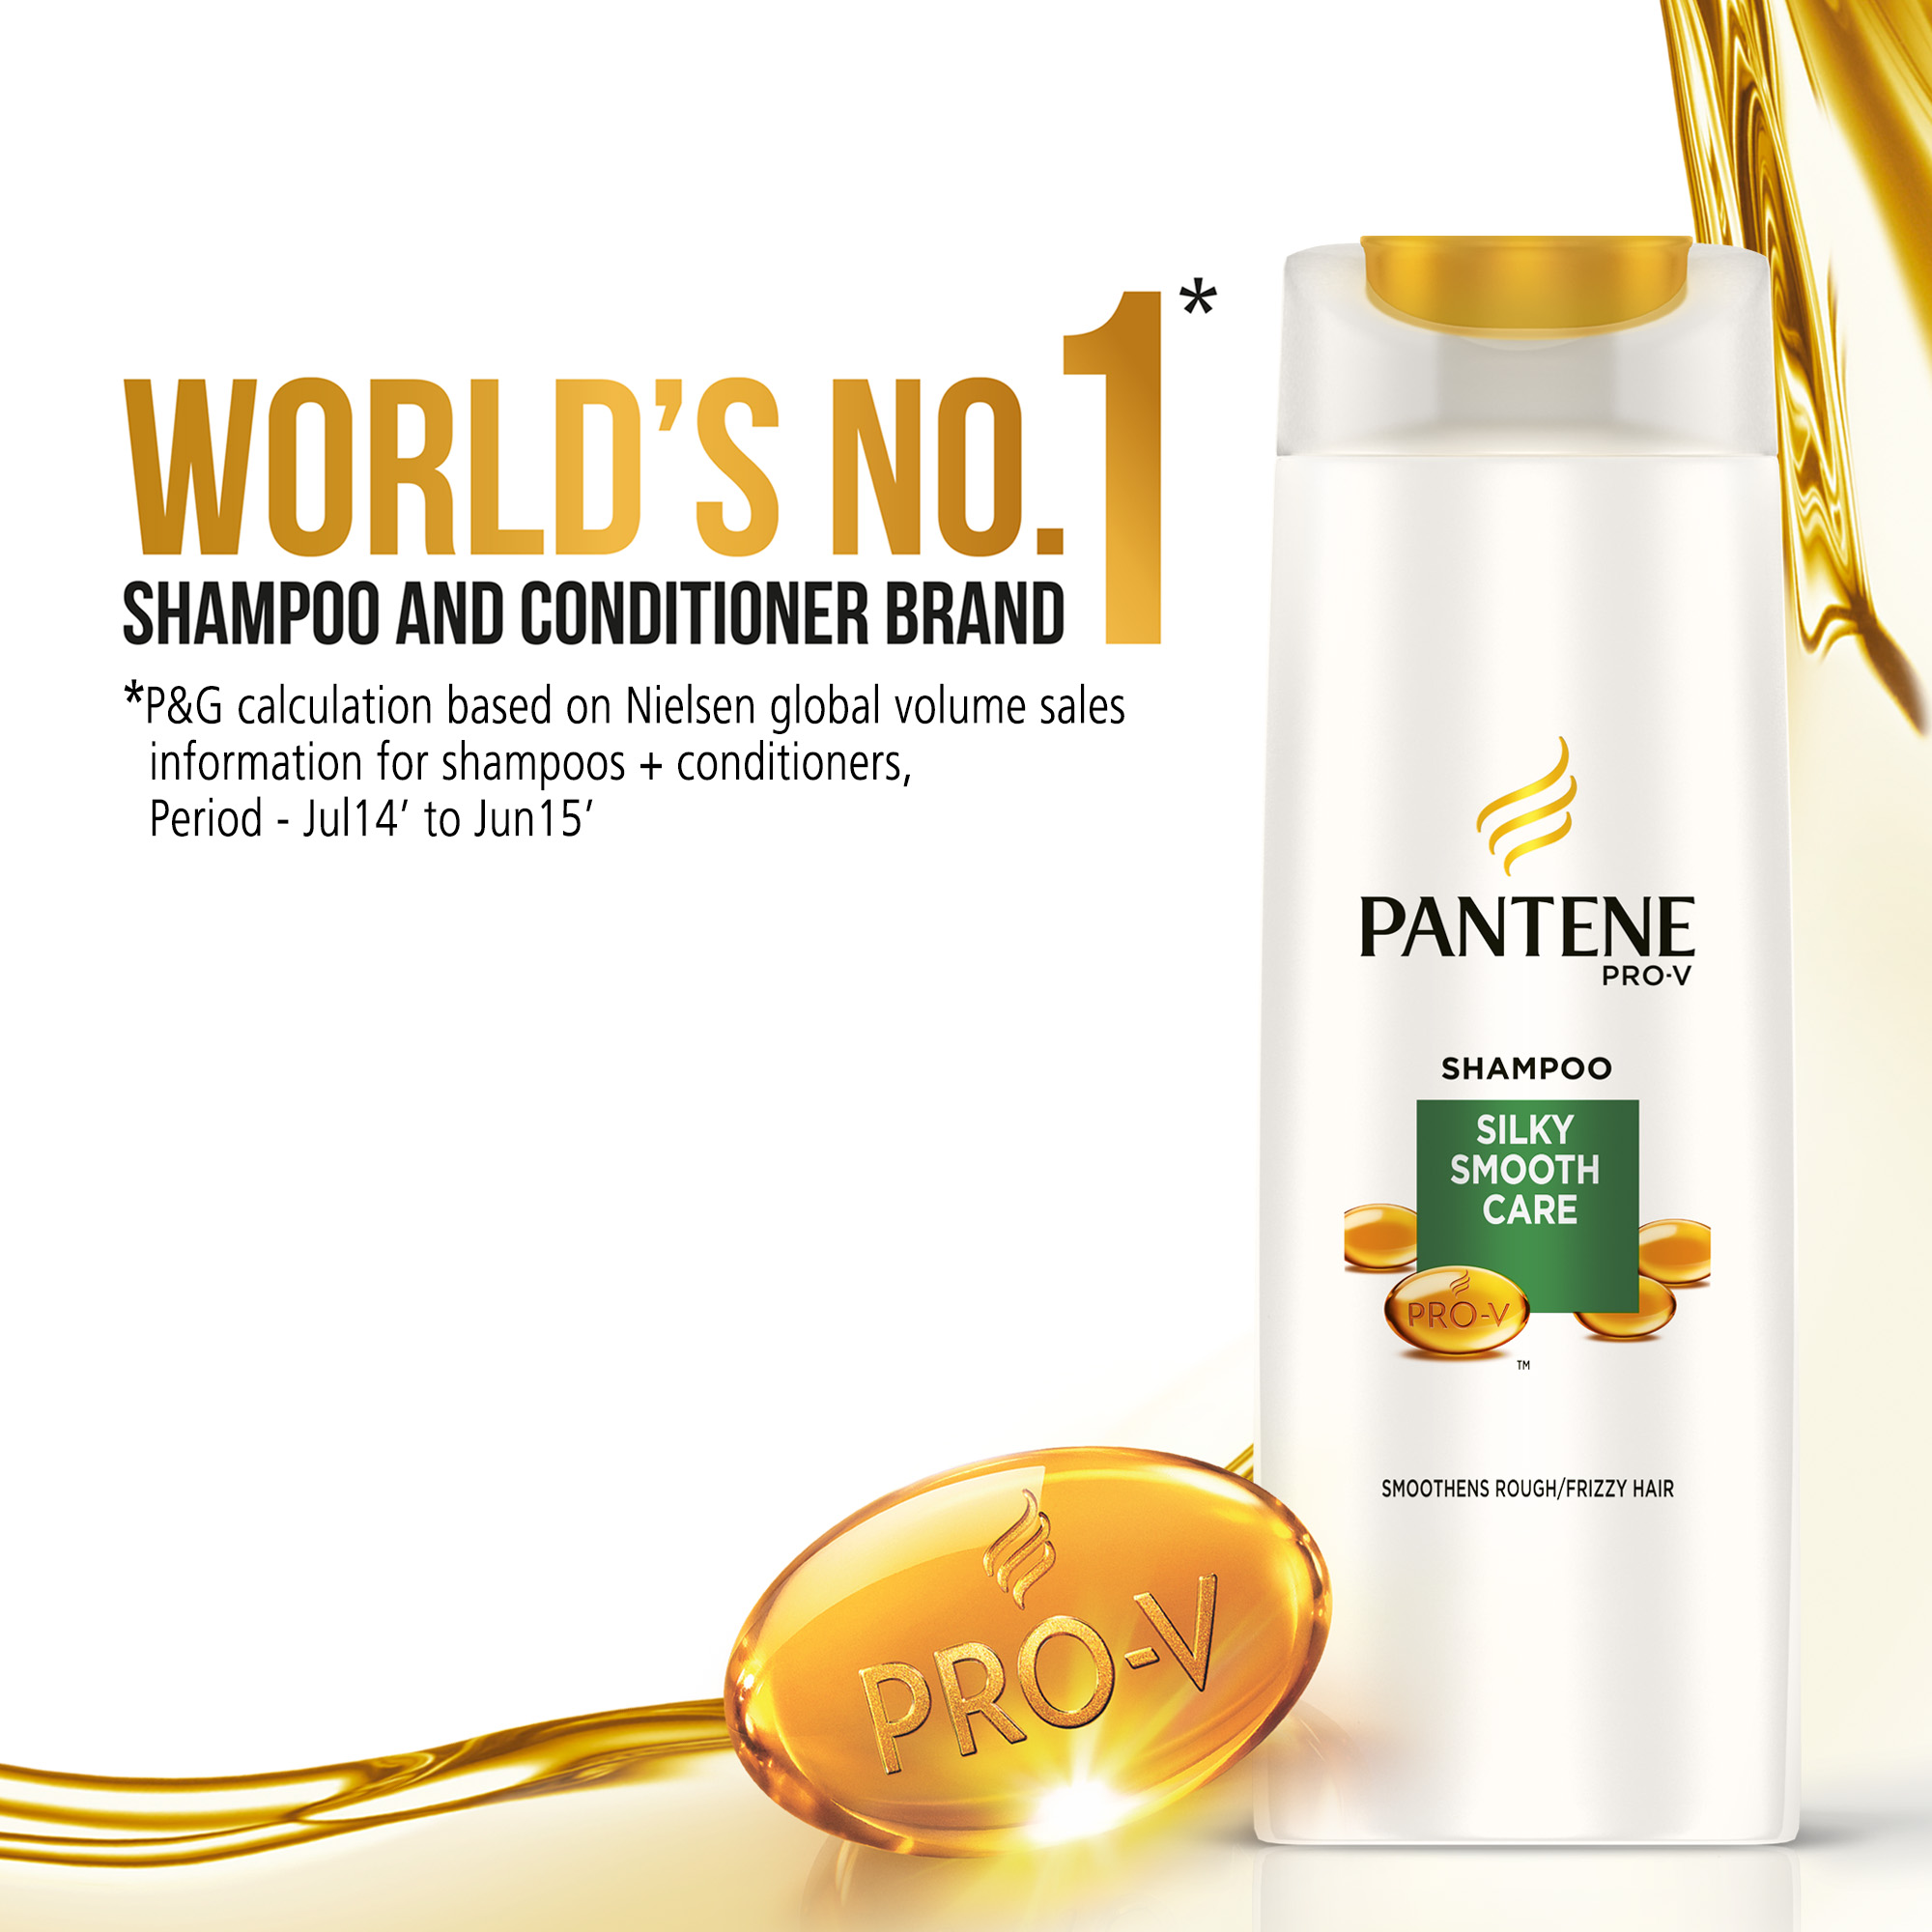 Pantene Advanced Hair Fall Solution Regimen Thank You Gift Pack Small